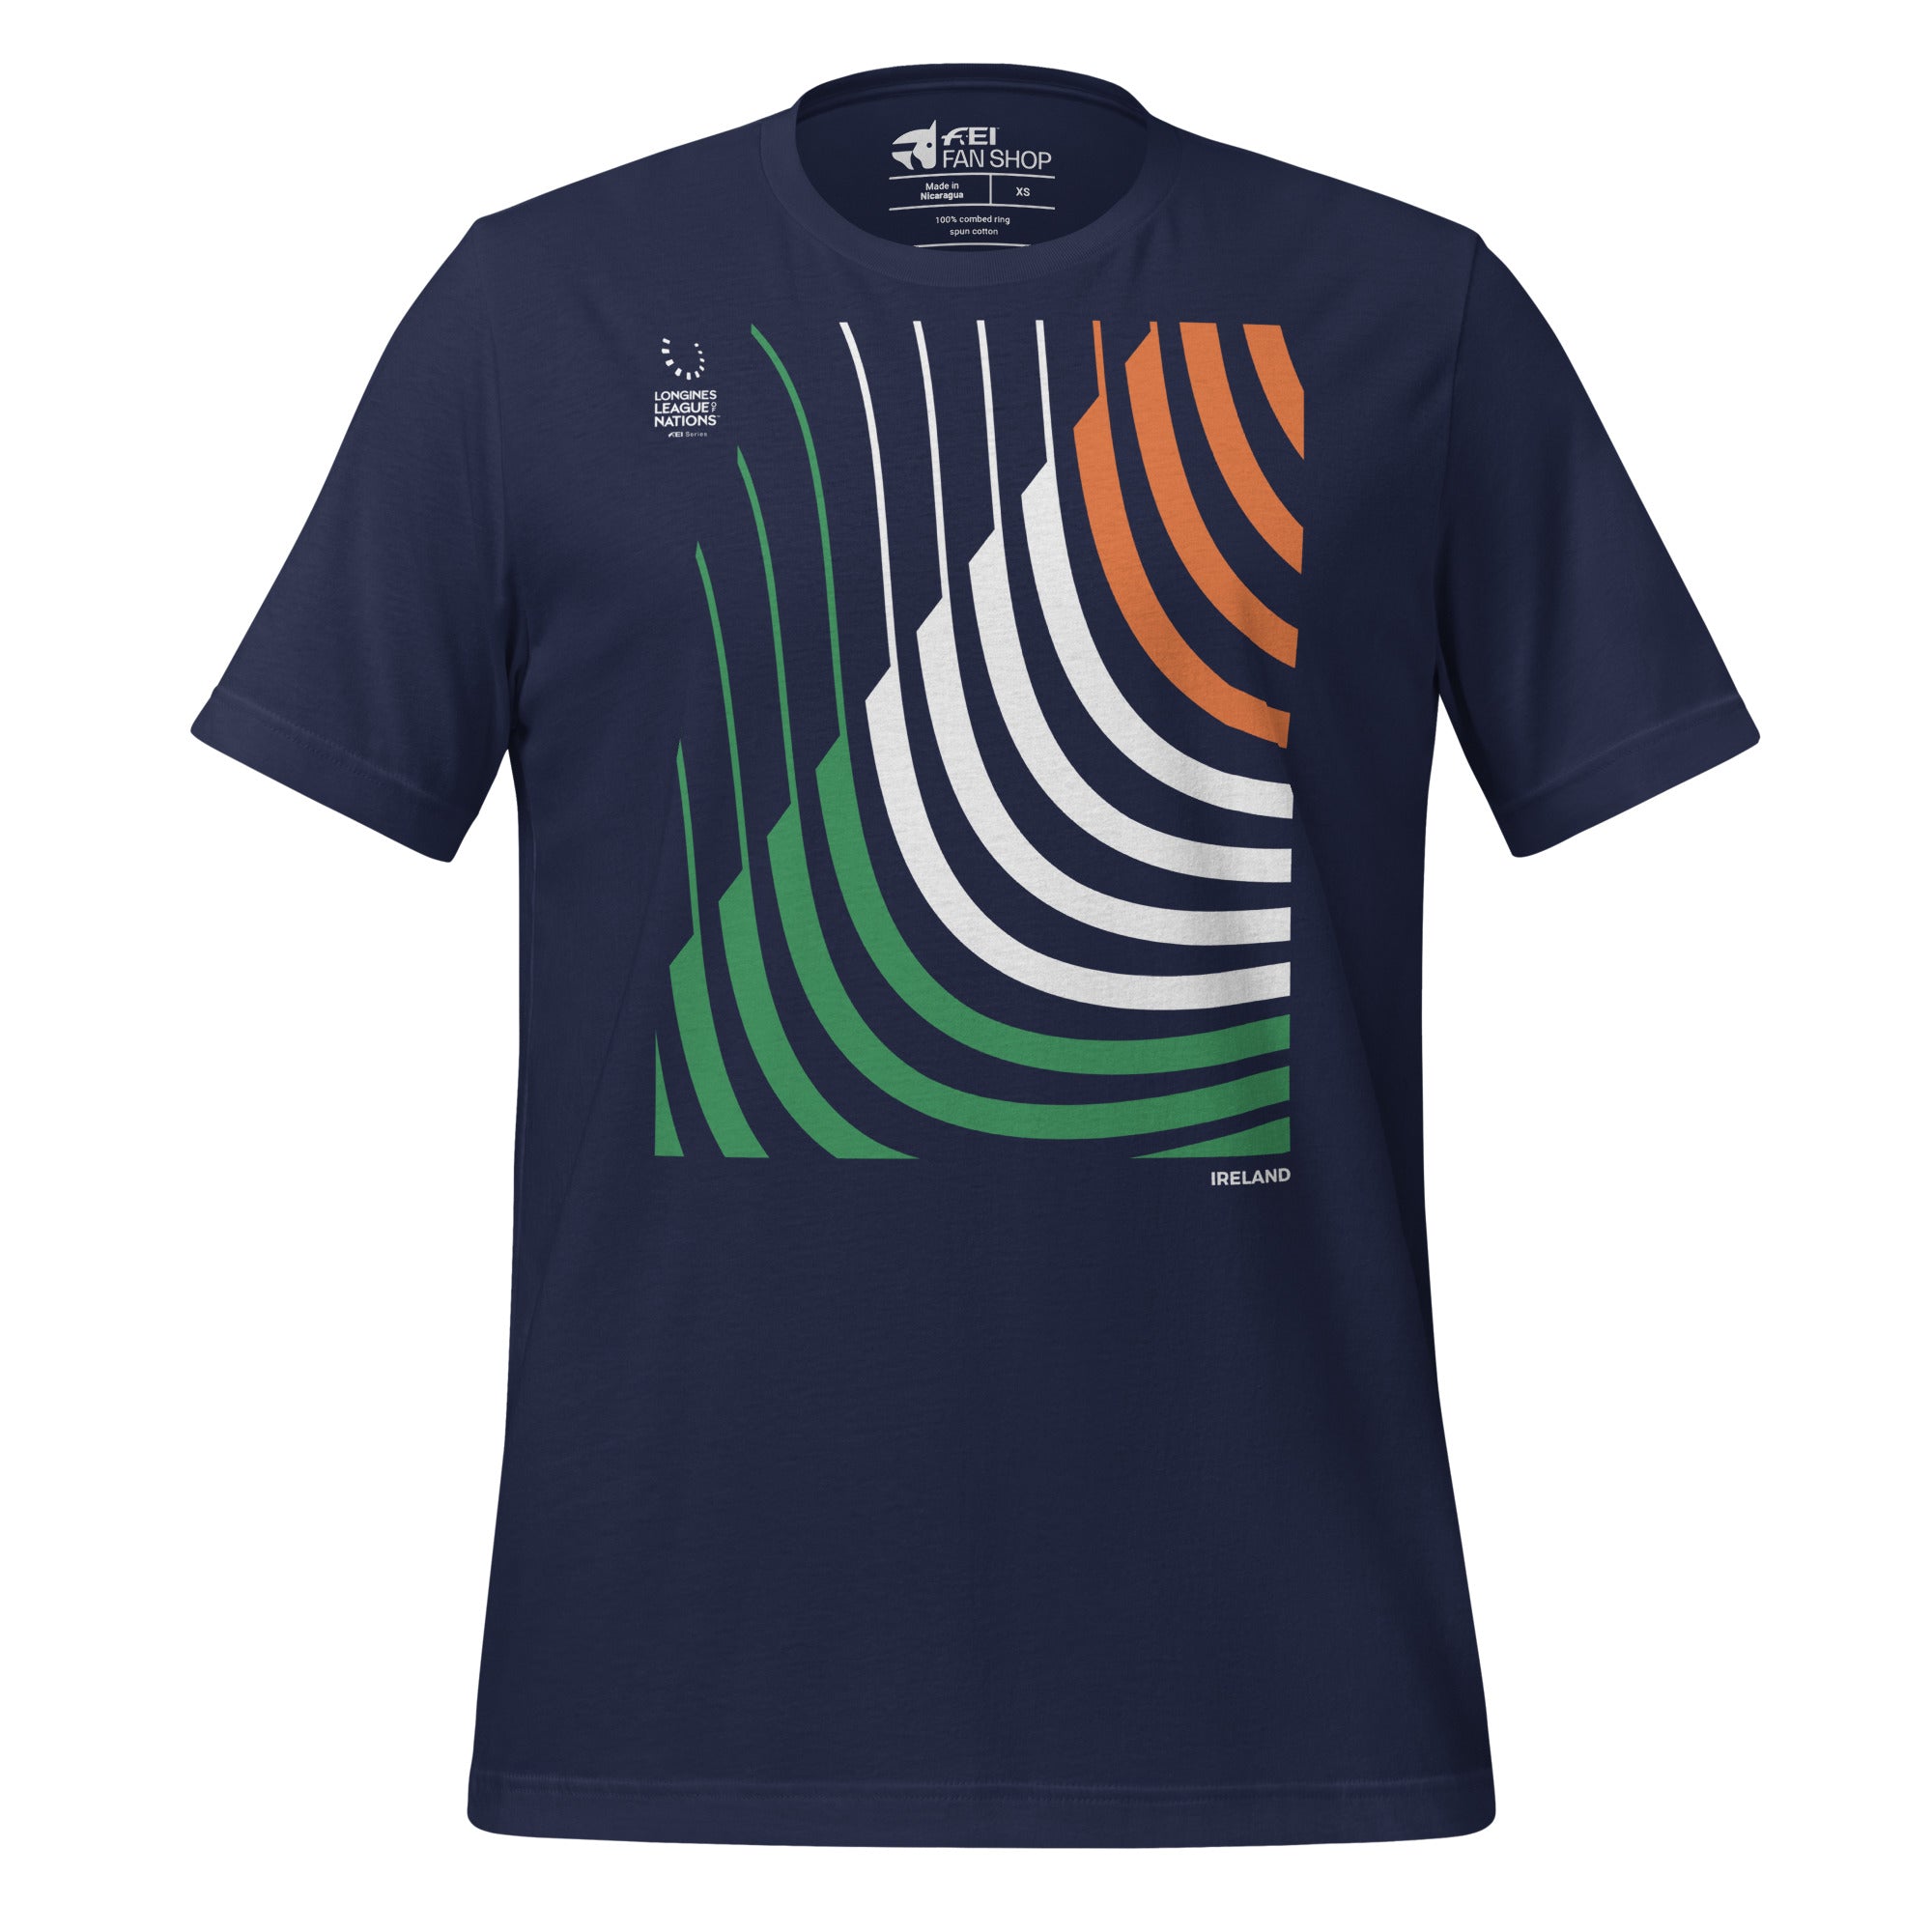 LLN Ireland T-shirt